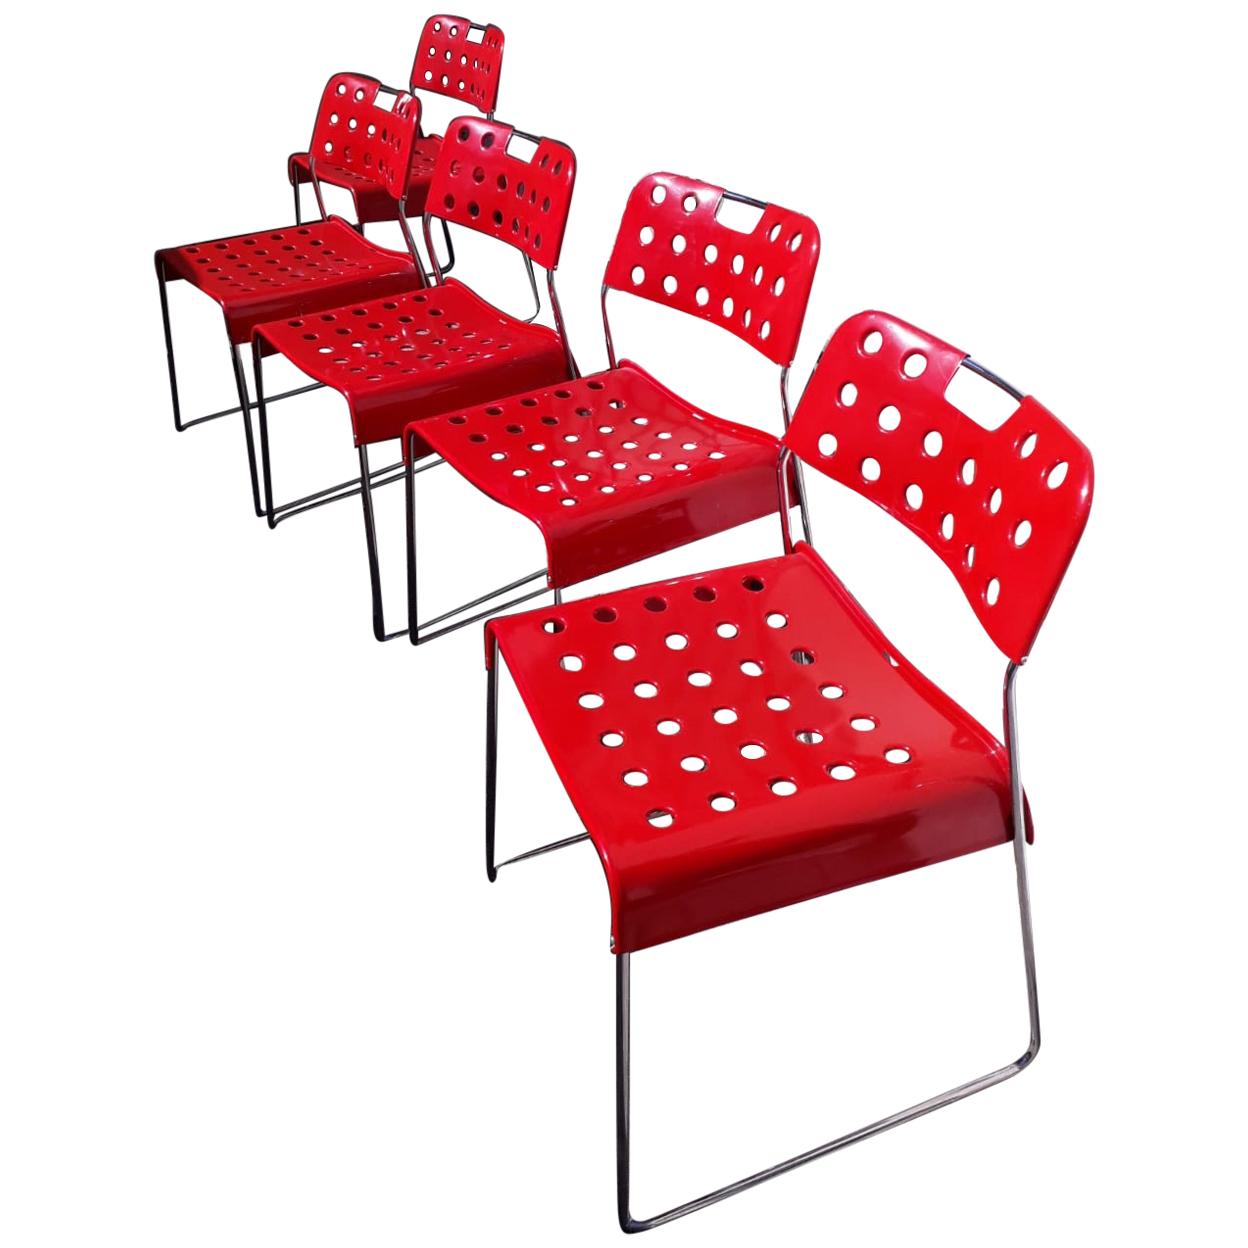 5 Omkstak Red Chairs by Redney Kinsman for Bieffeplast, 1960s For Sale